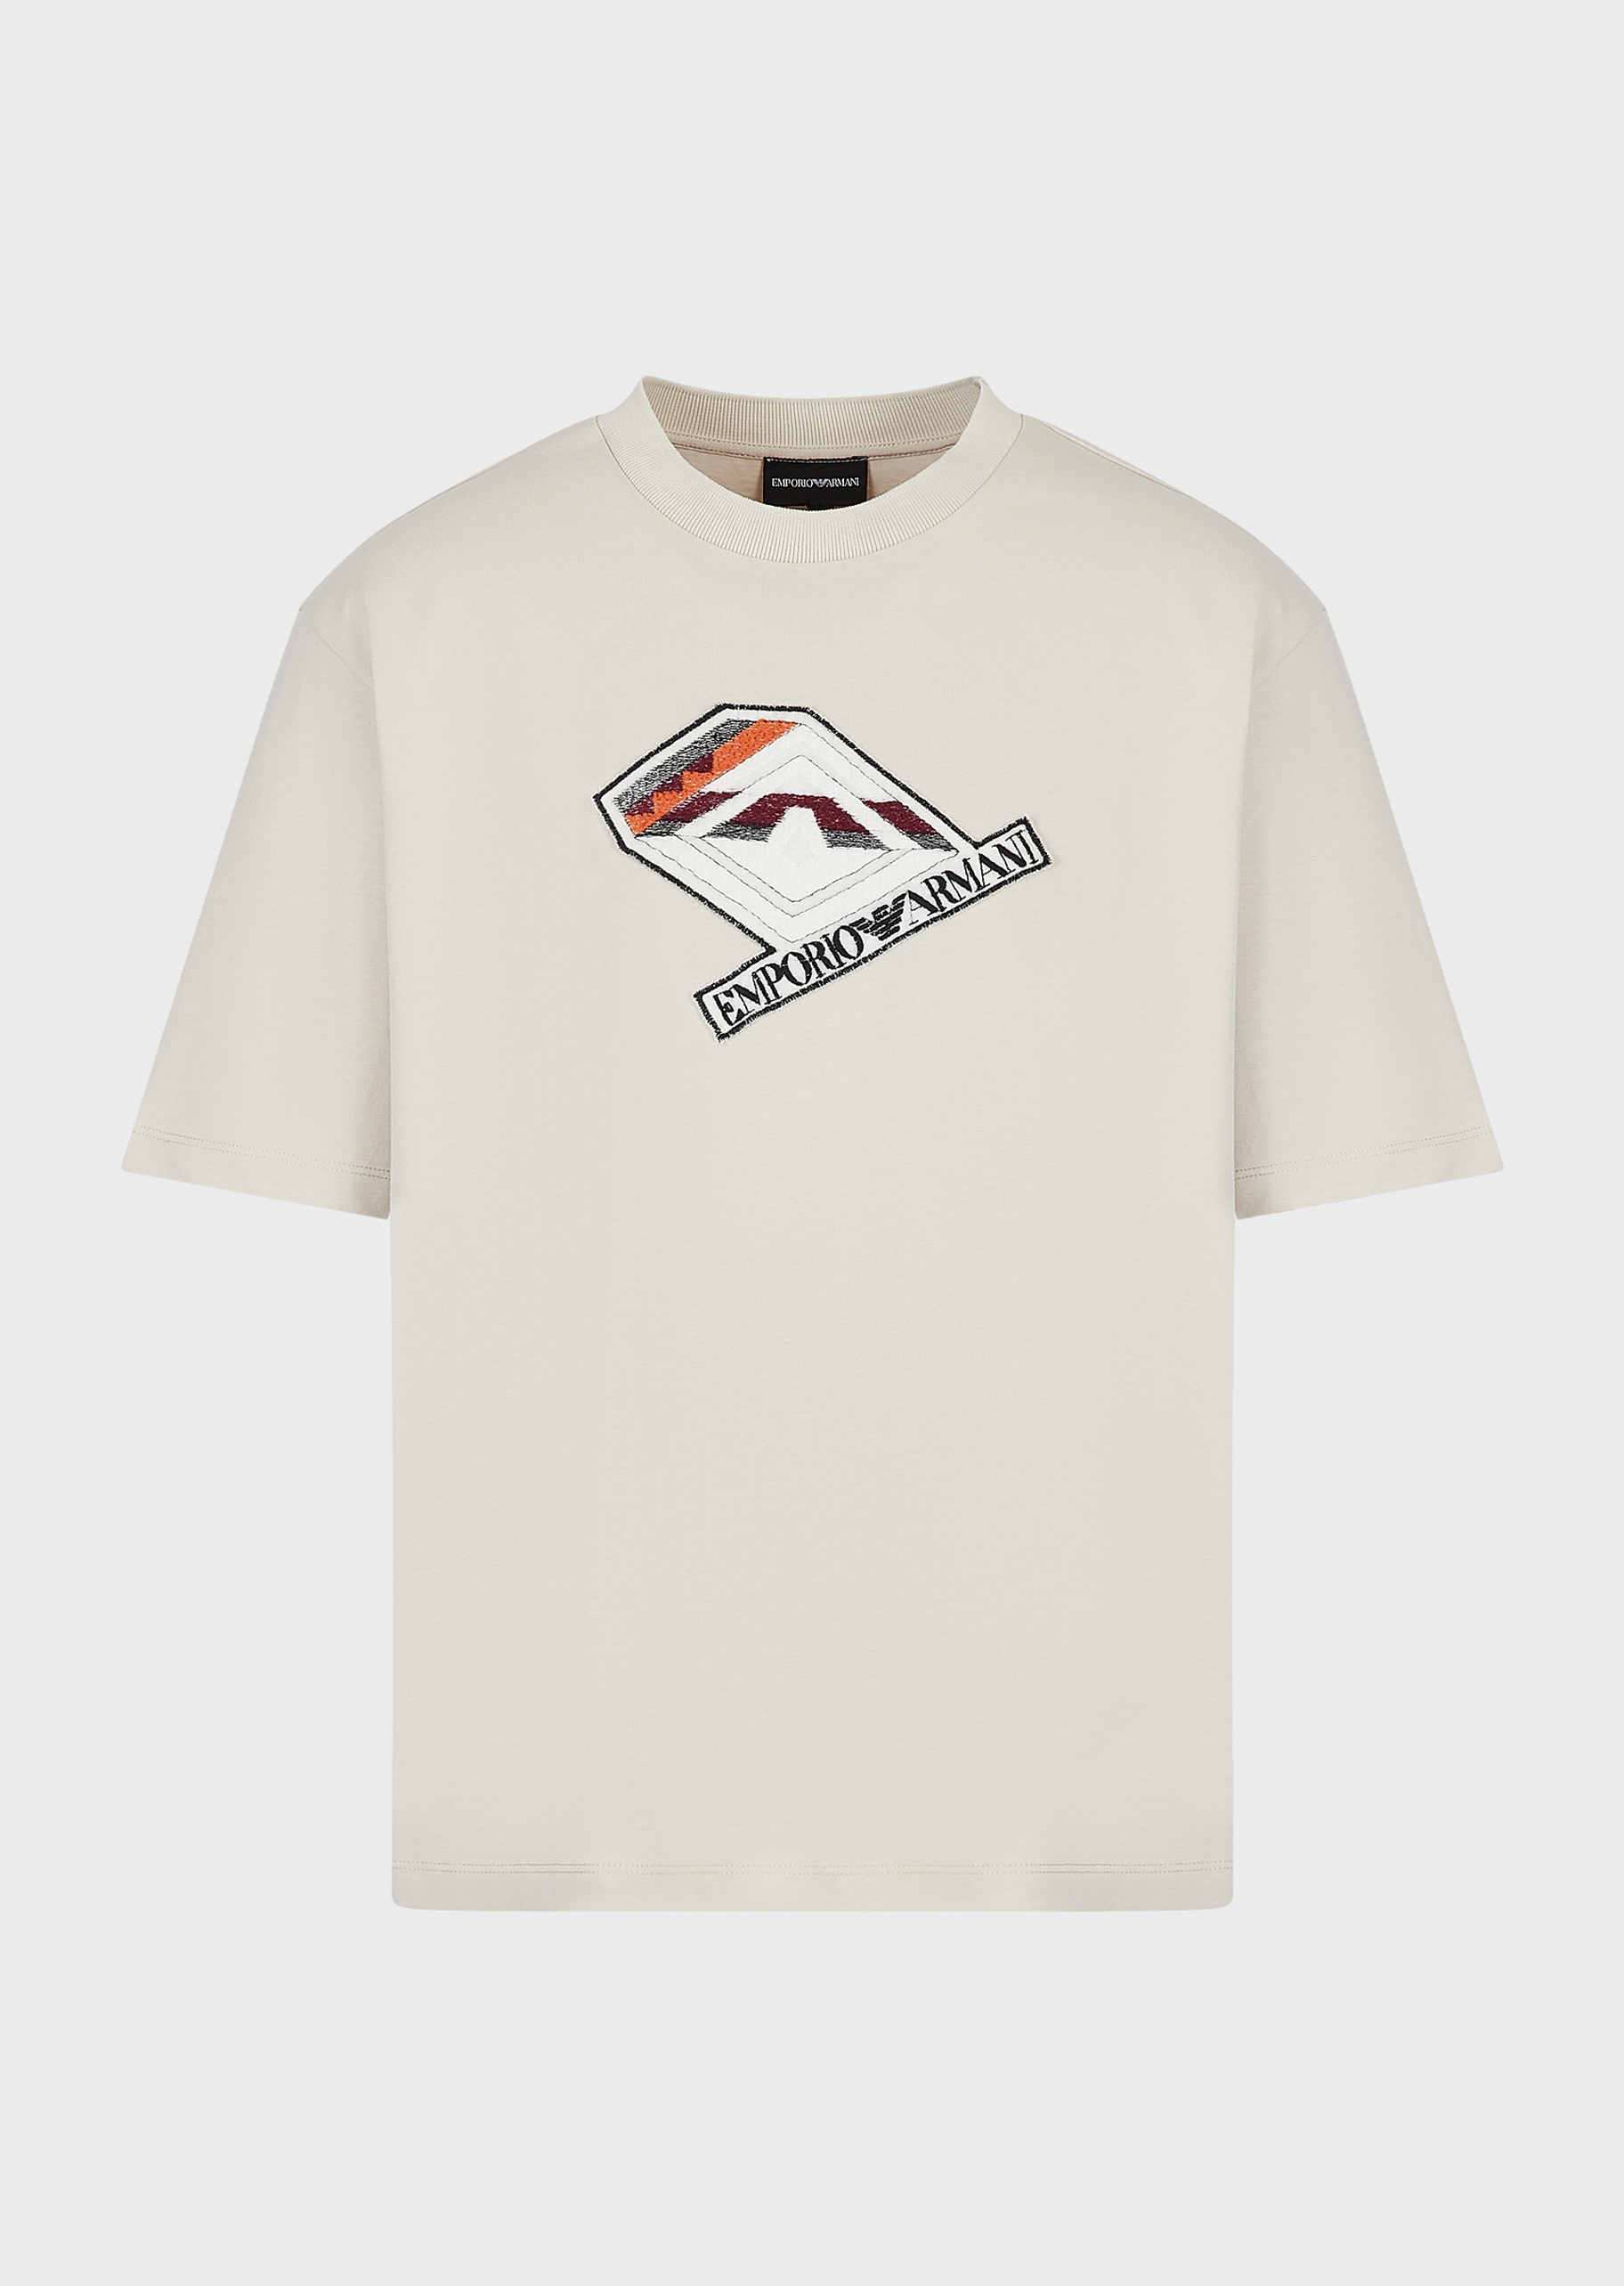 Emporio Armani 立体贴片短袖T恤